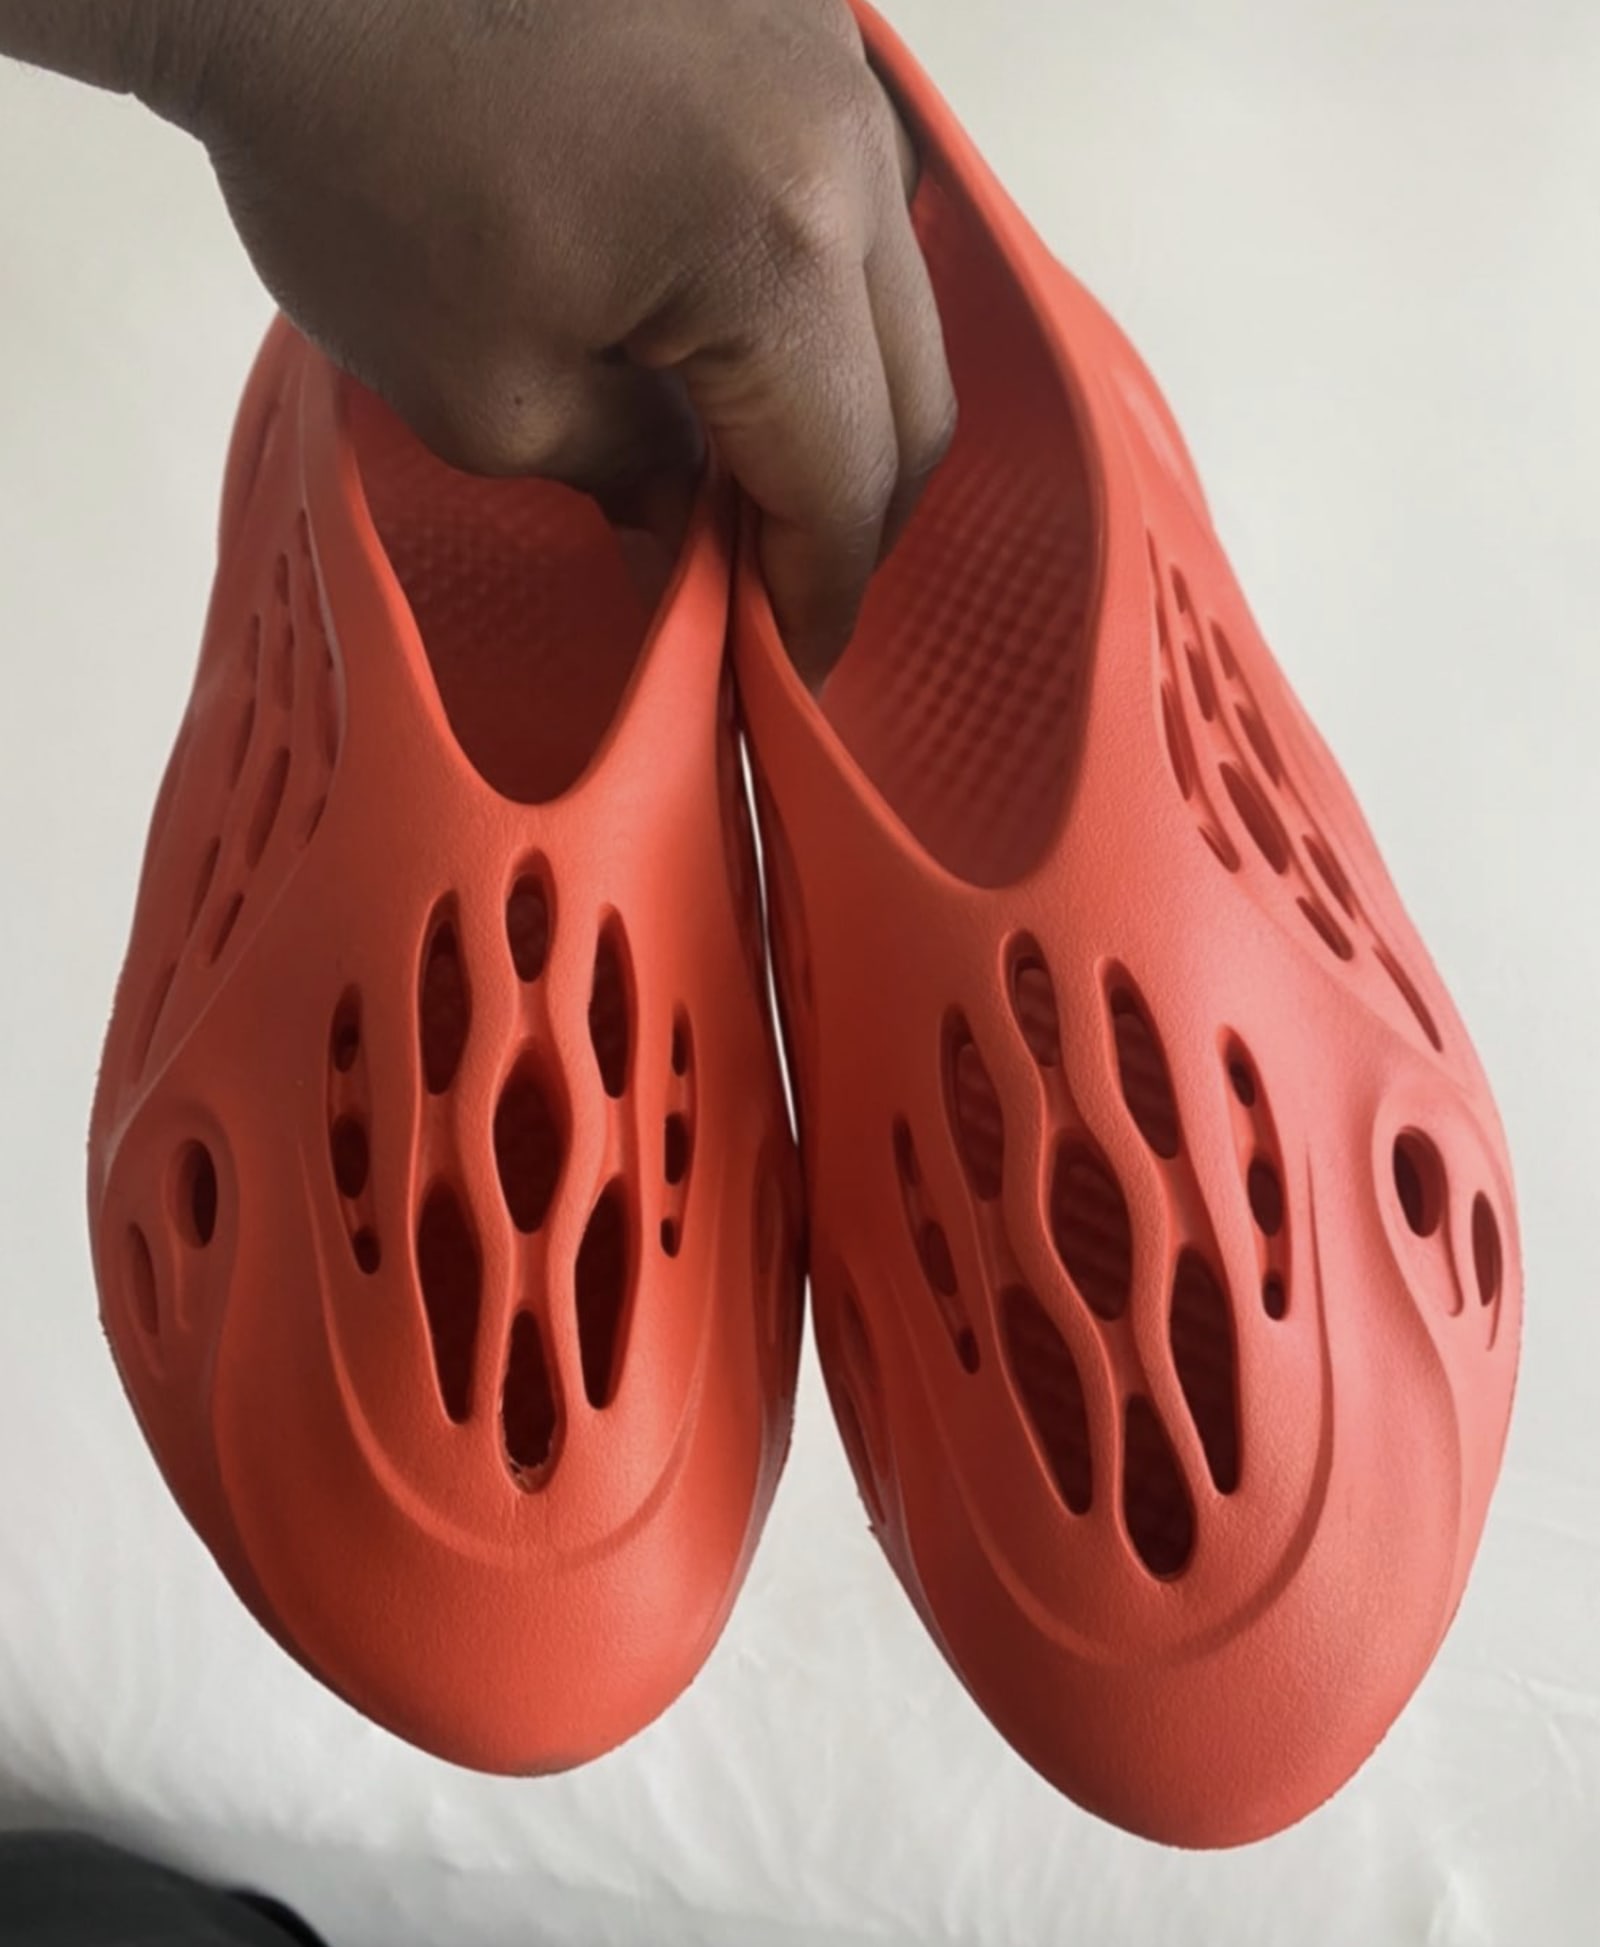 Adidas Yeezy Foam Runner Receives &quot;Red October&quot; Makeover